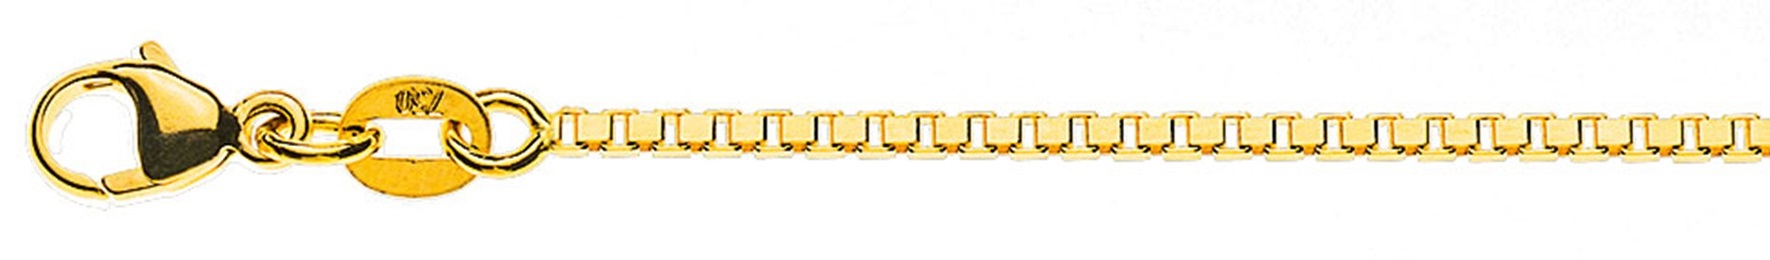 AURONOS Prestige Necklace yellow gold 18K Venetian chain diamond 40cm 1.4mm